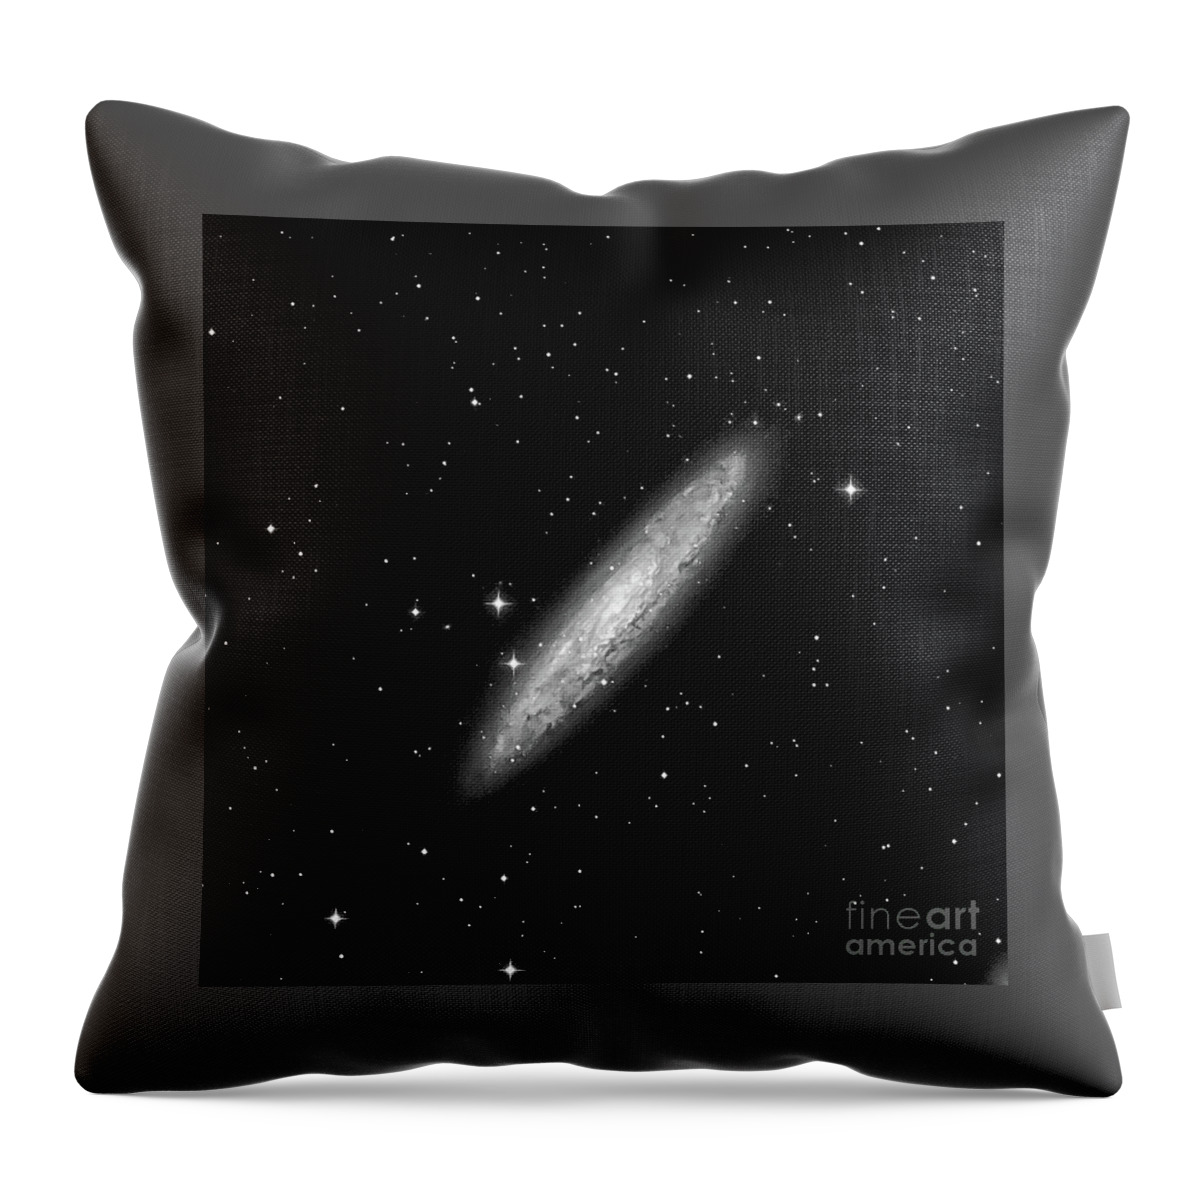 Ngc253 The Sculptor Galaxy Throw Pillow featuring the photograph NGC253 The Sculptor Galaxy by Jim DeLillo